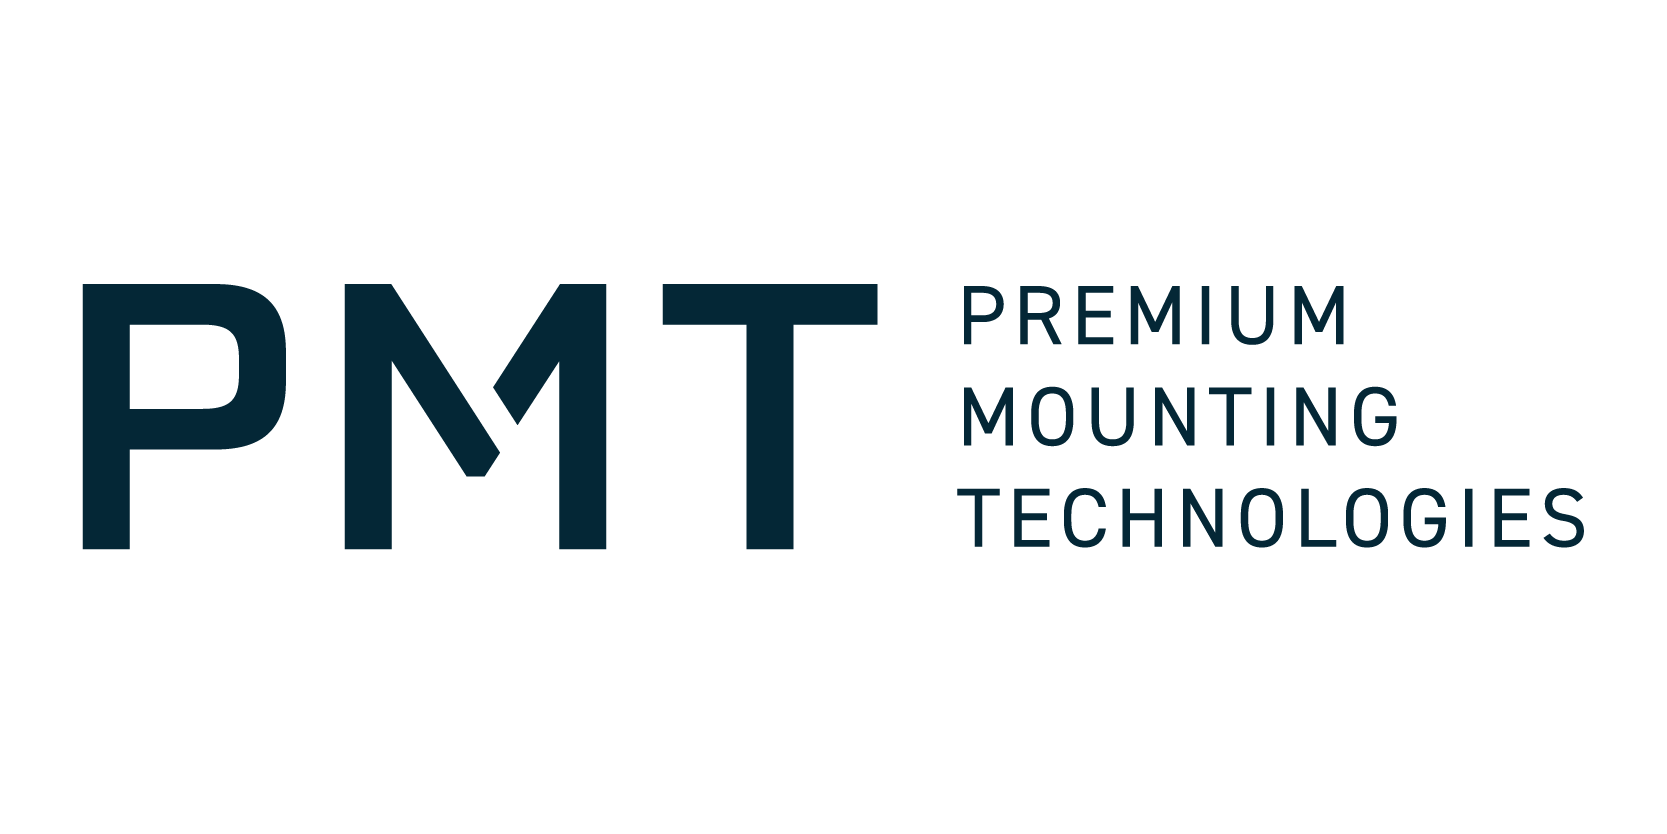 memodo_PMT-Logo_premium-mounting-technologies-pmt-logo